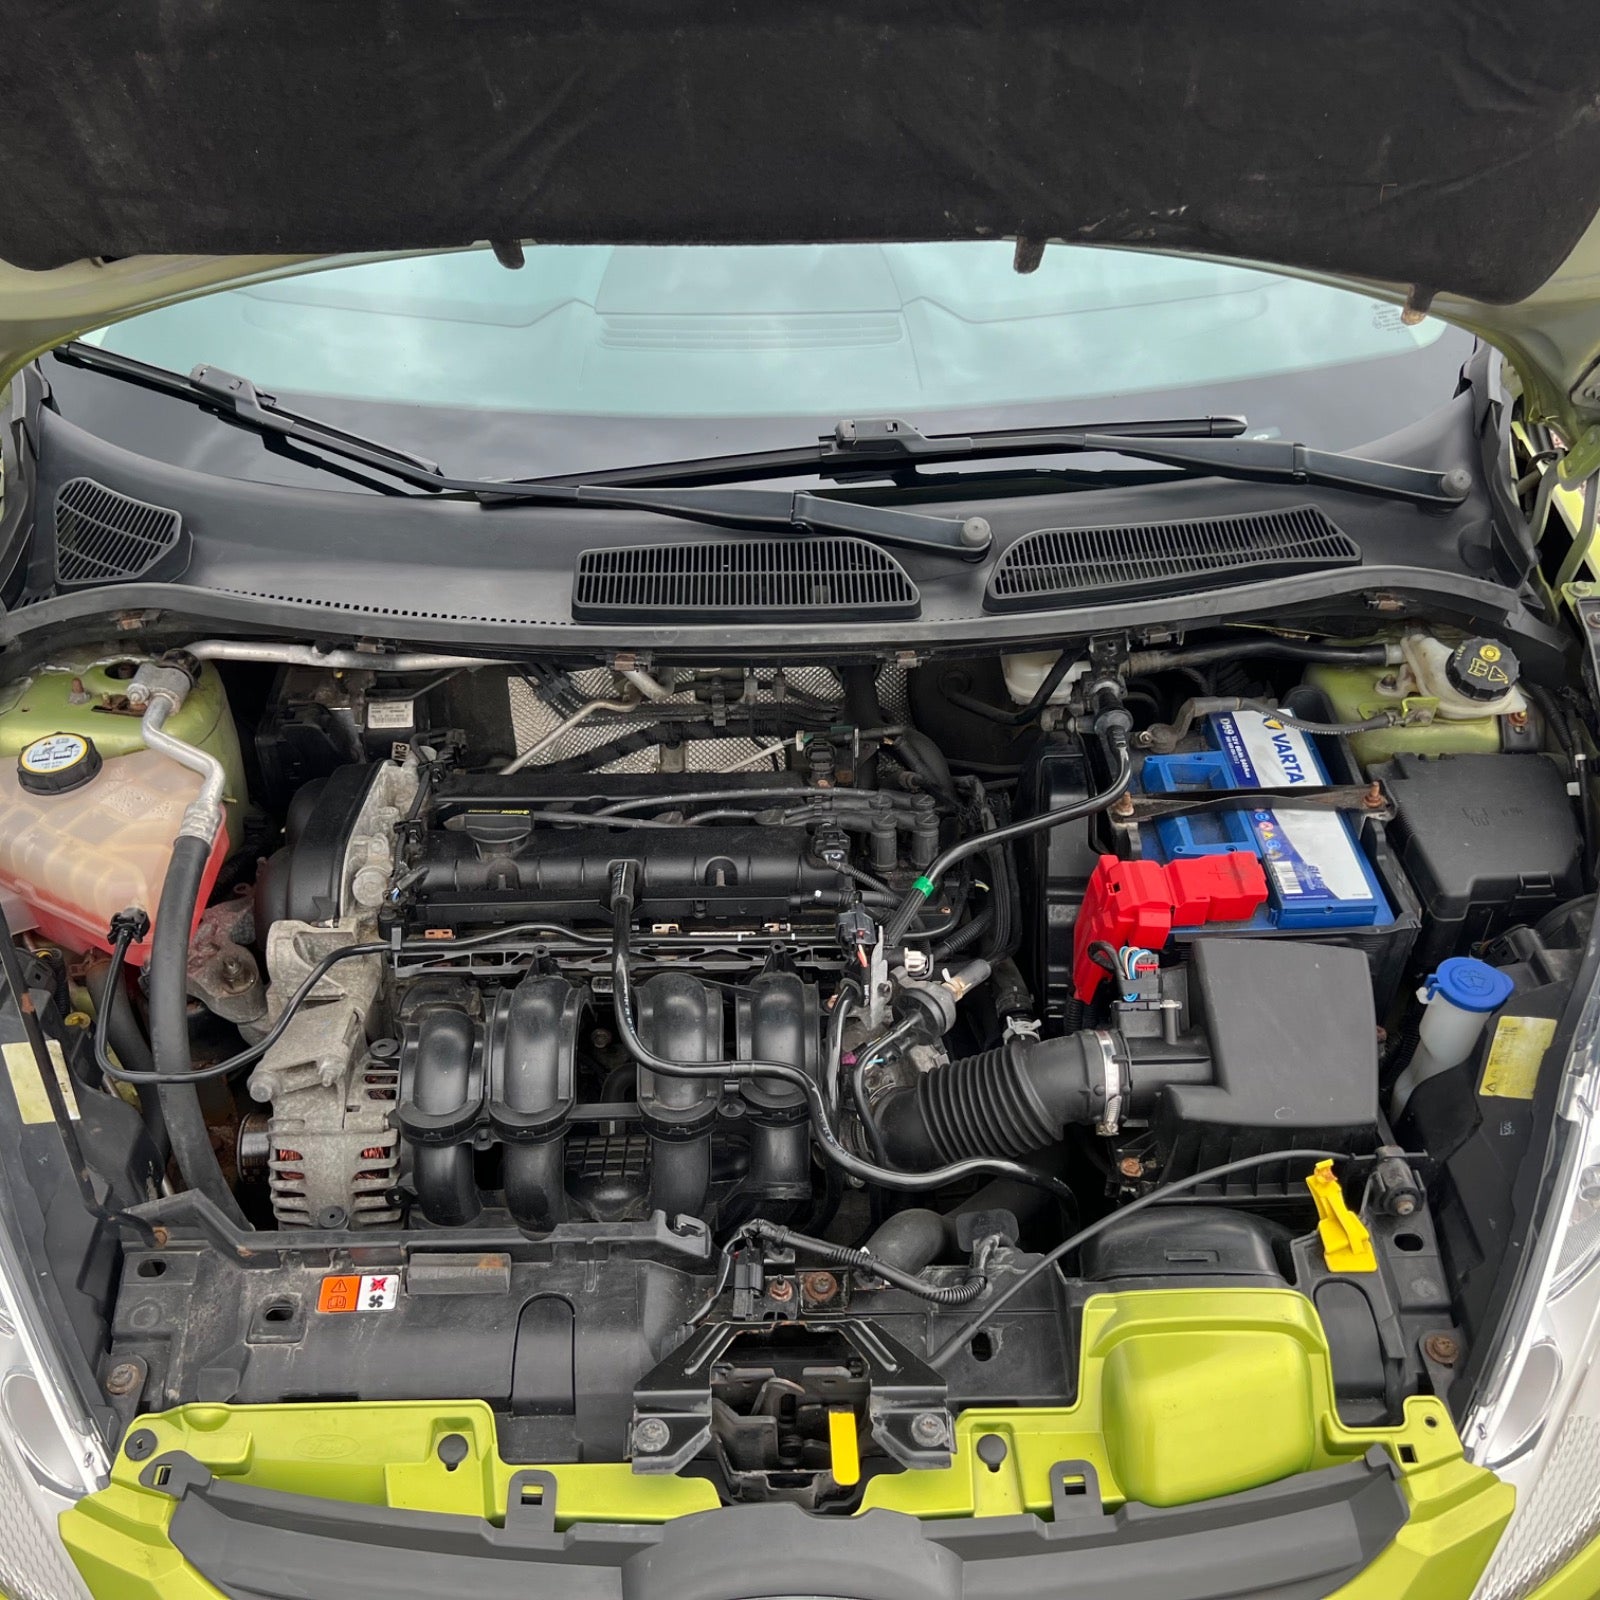 Ford Fiesta 1,6 Ti-VCT Sport Benzin modelår 2011 km 177000